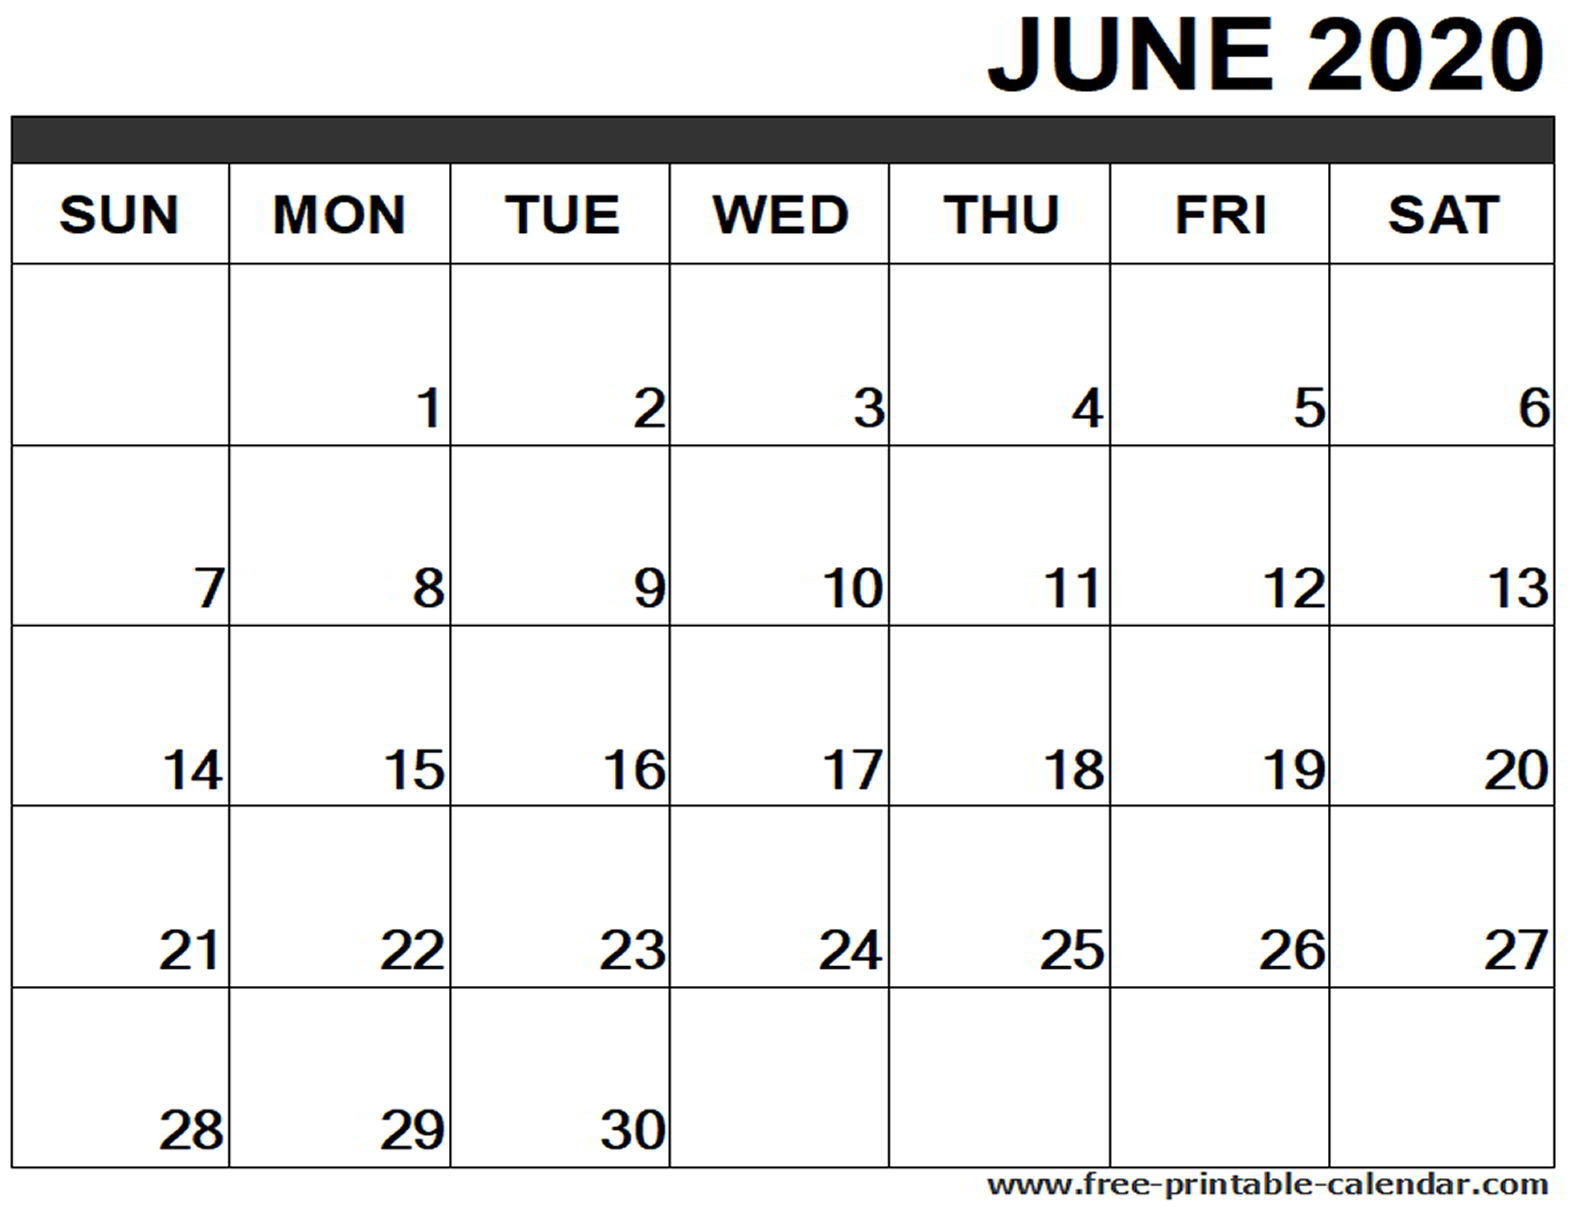 June 2020 Calendar Printable - Free-Printable-Calendar